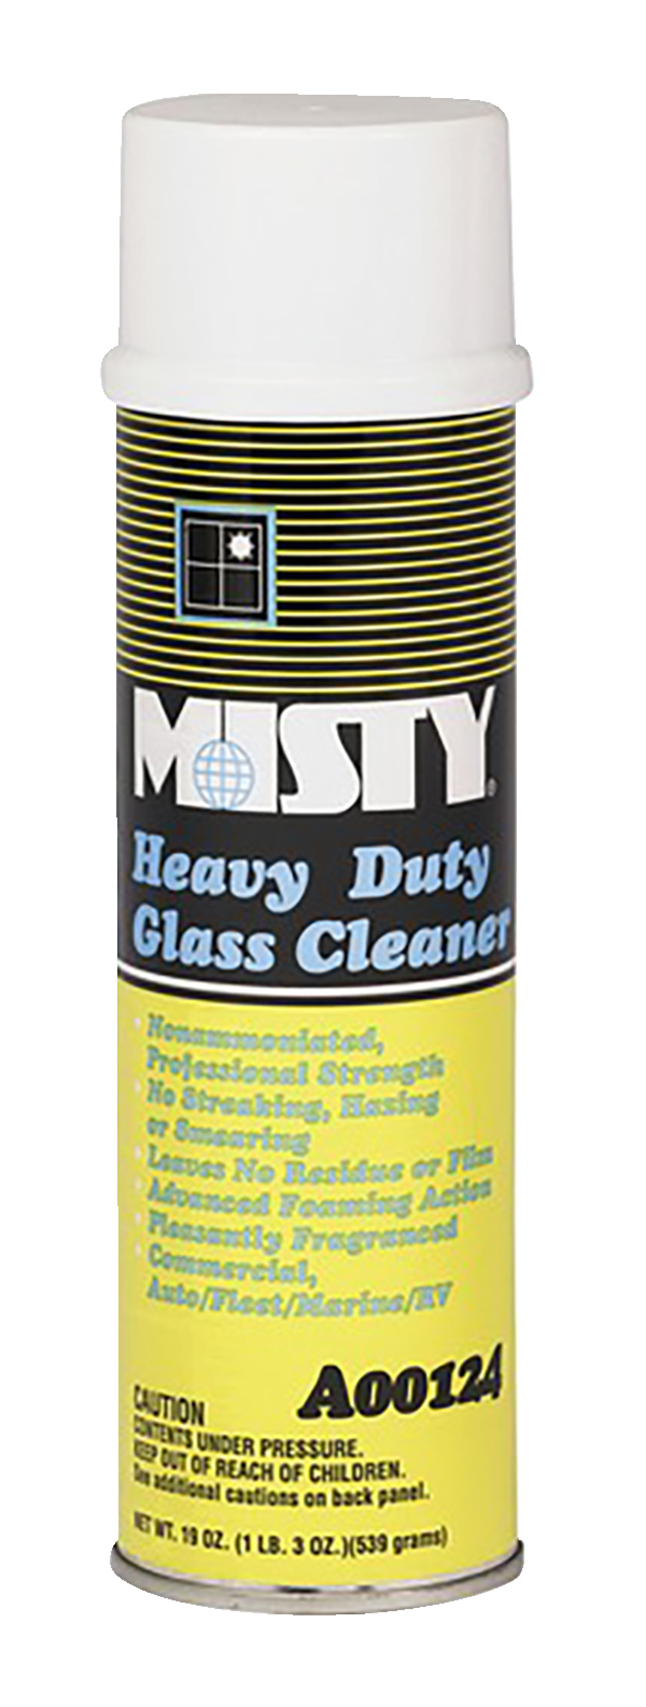 MISTY Heavy Duty Glass Cleaner, Lemon Scent, Item Number 2049922